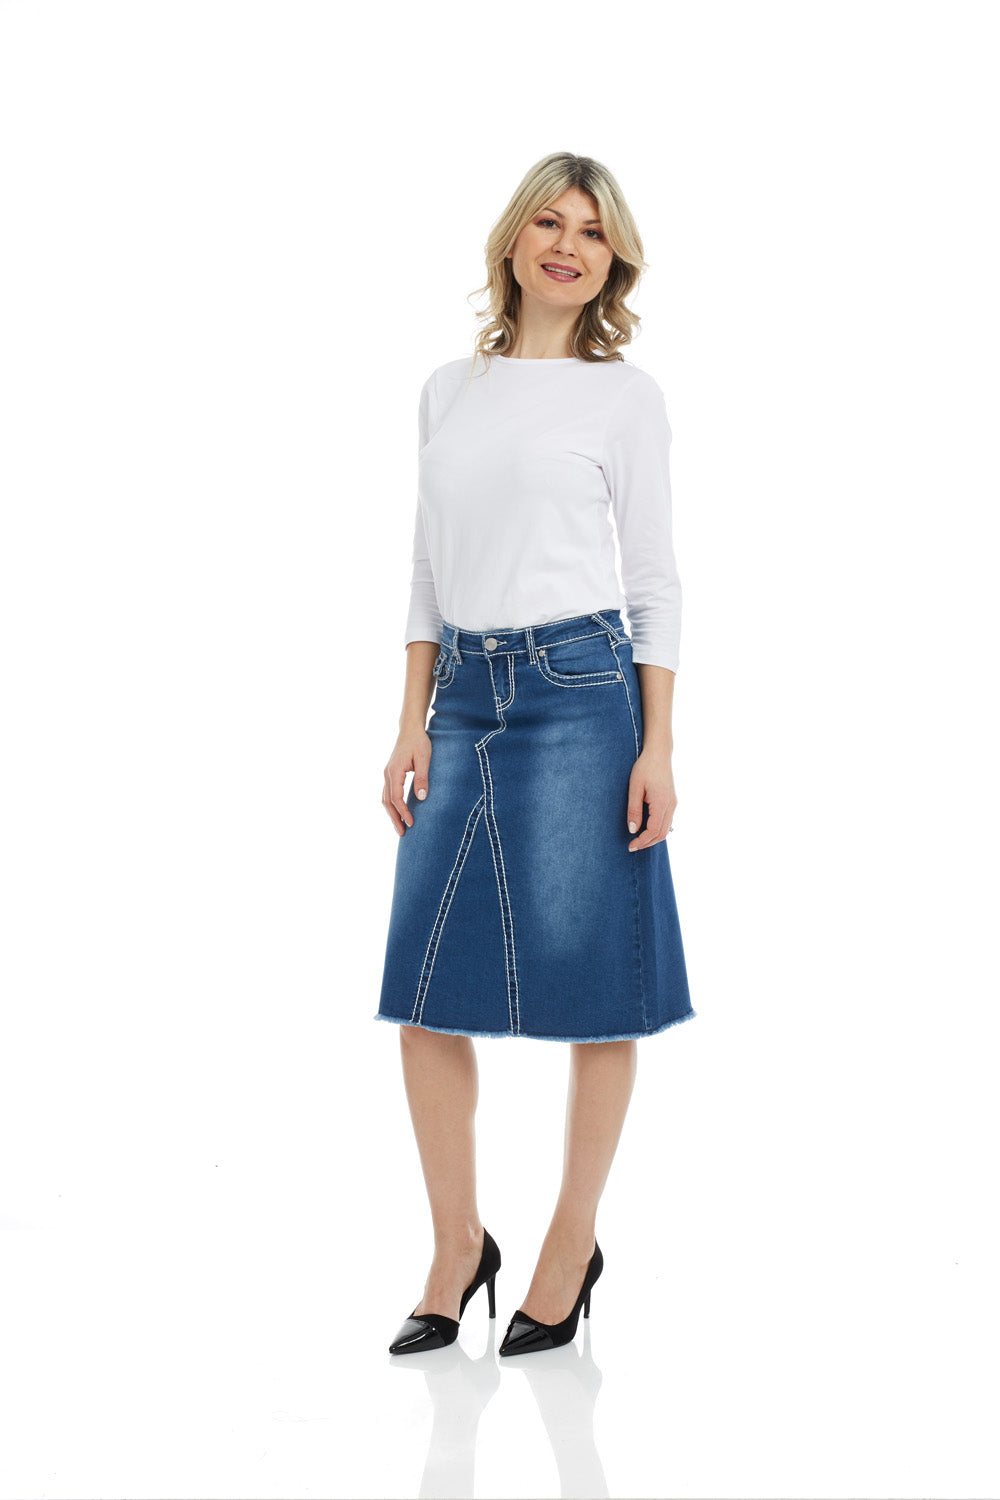 Esteez VICTORIA Skirt - Modest Below the Knee A-line Flary Jean Skirt for Women - CLASSIC BLUE